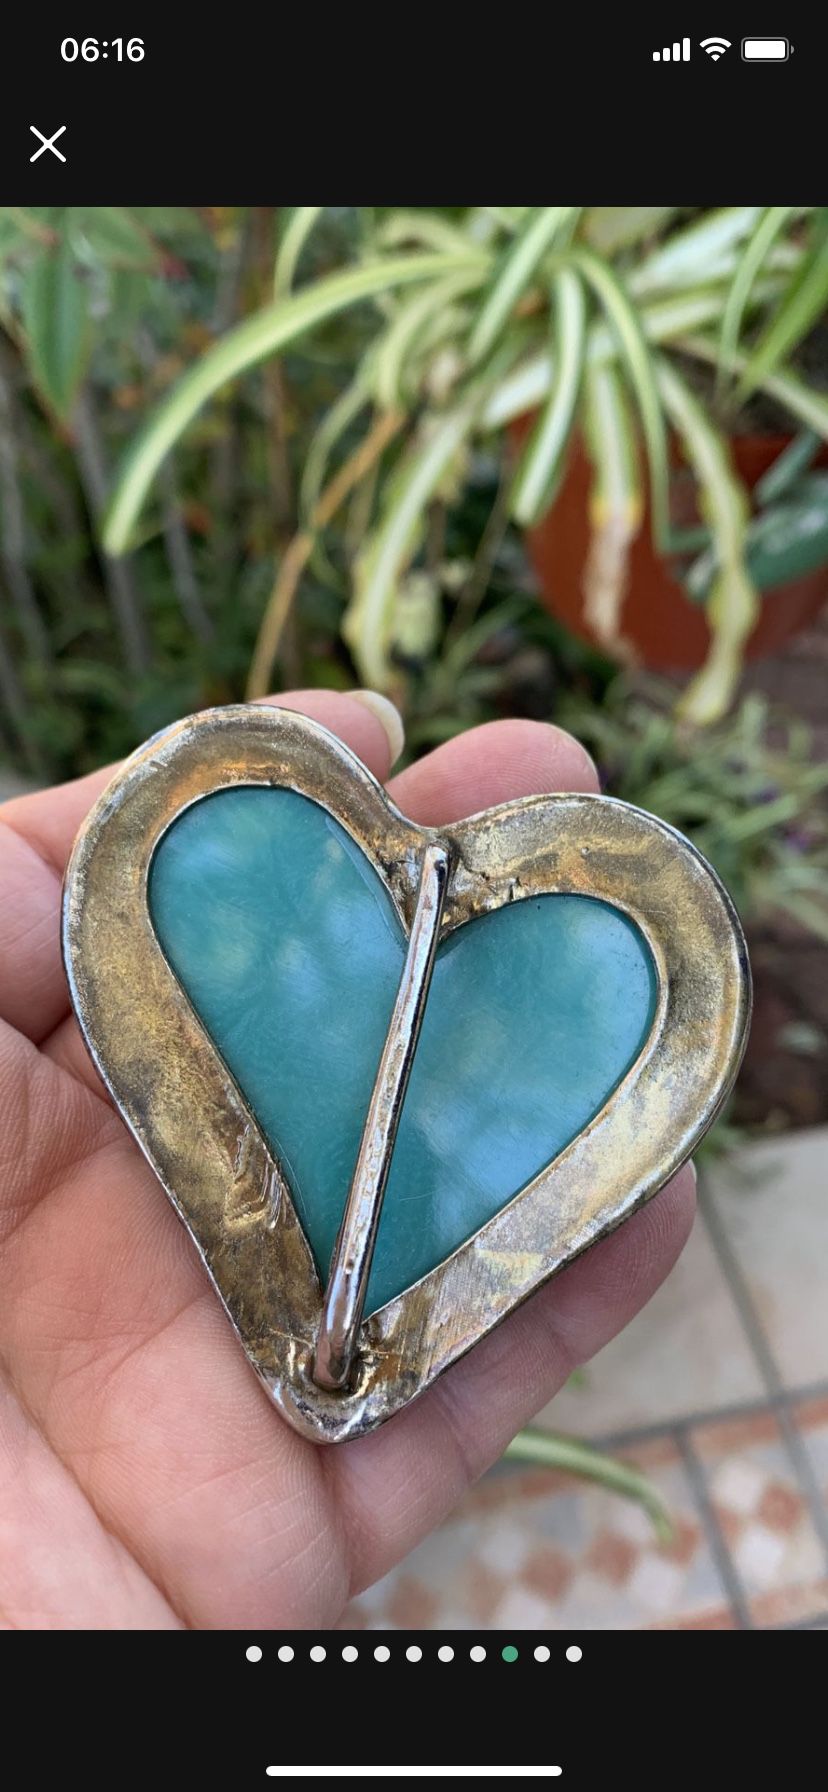 Heart Shaped Broach/pin & Decoration ❤️